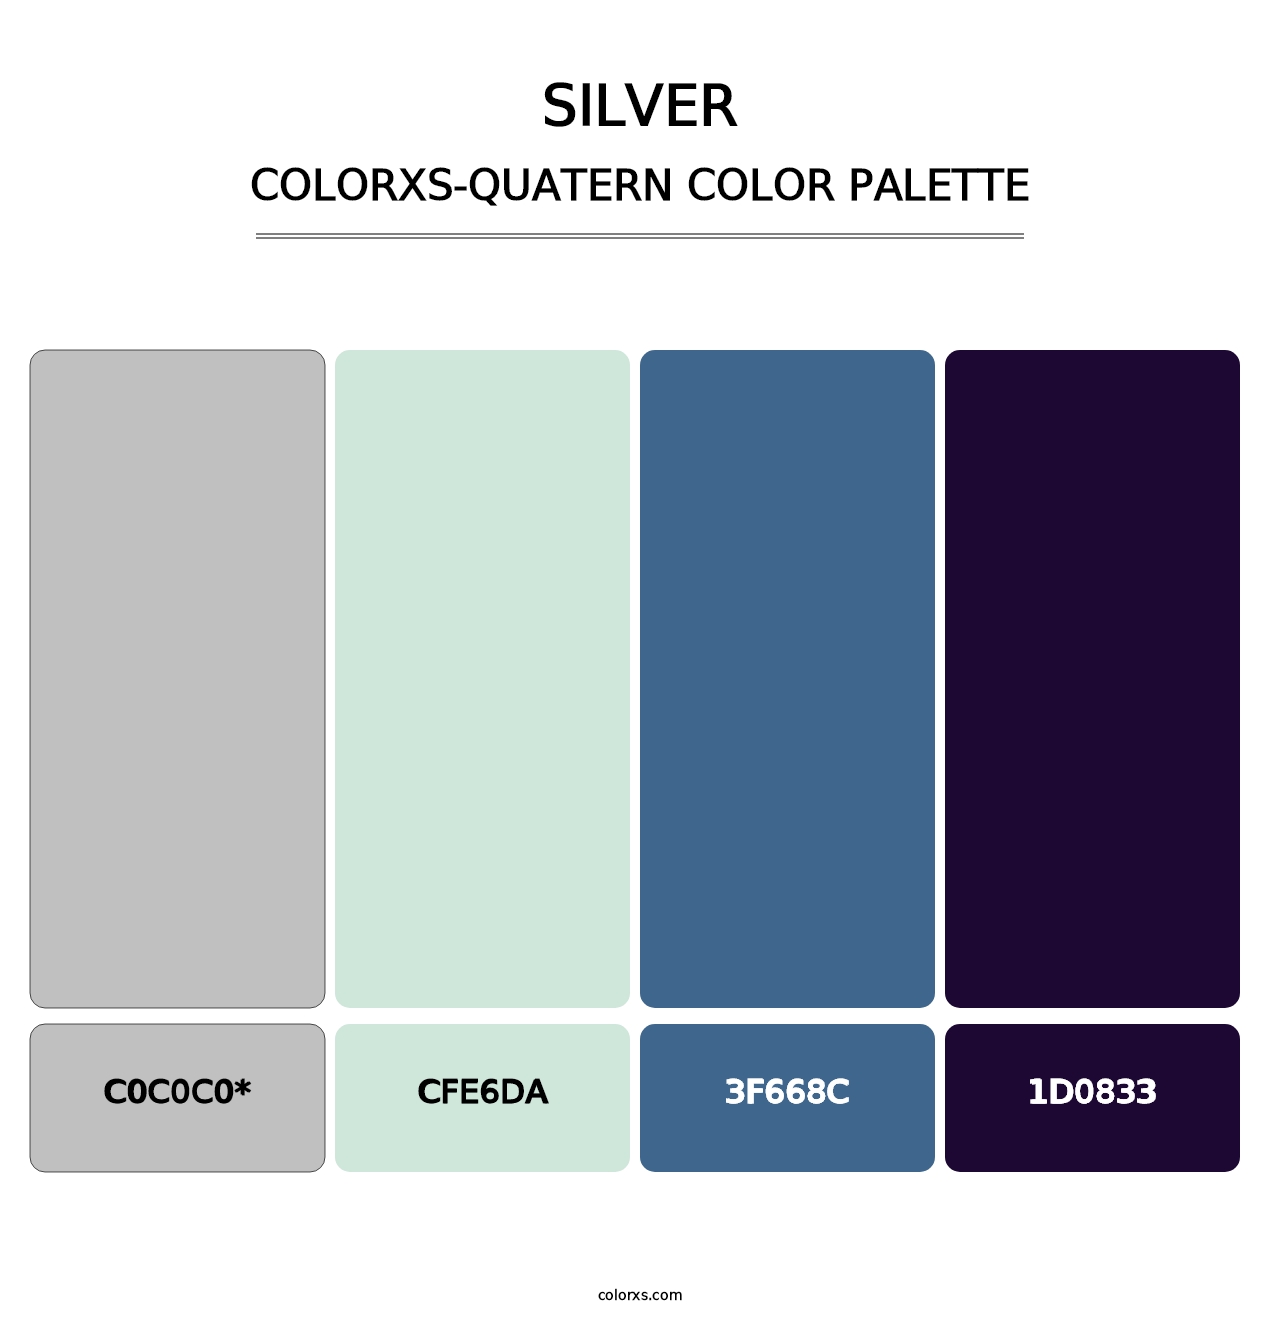 Silver - Colorxs Quatern Palette